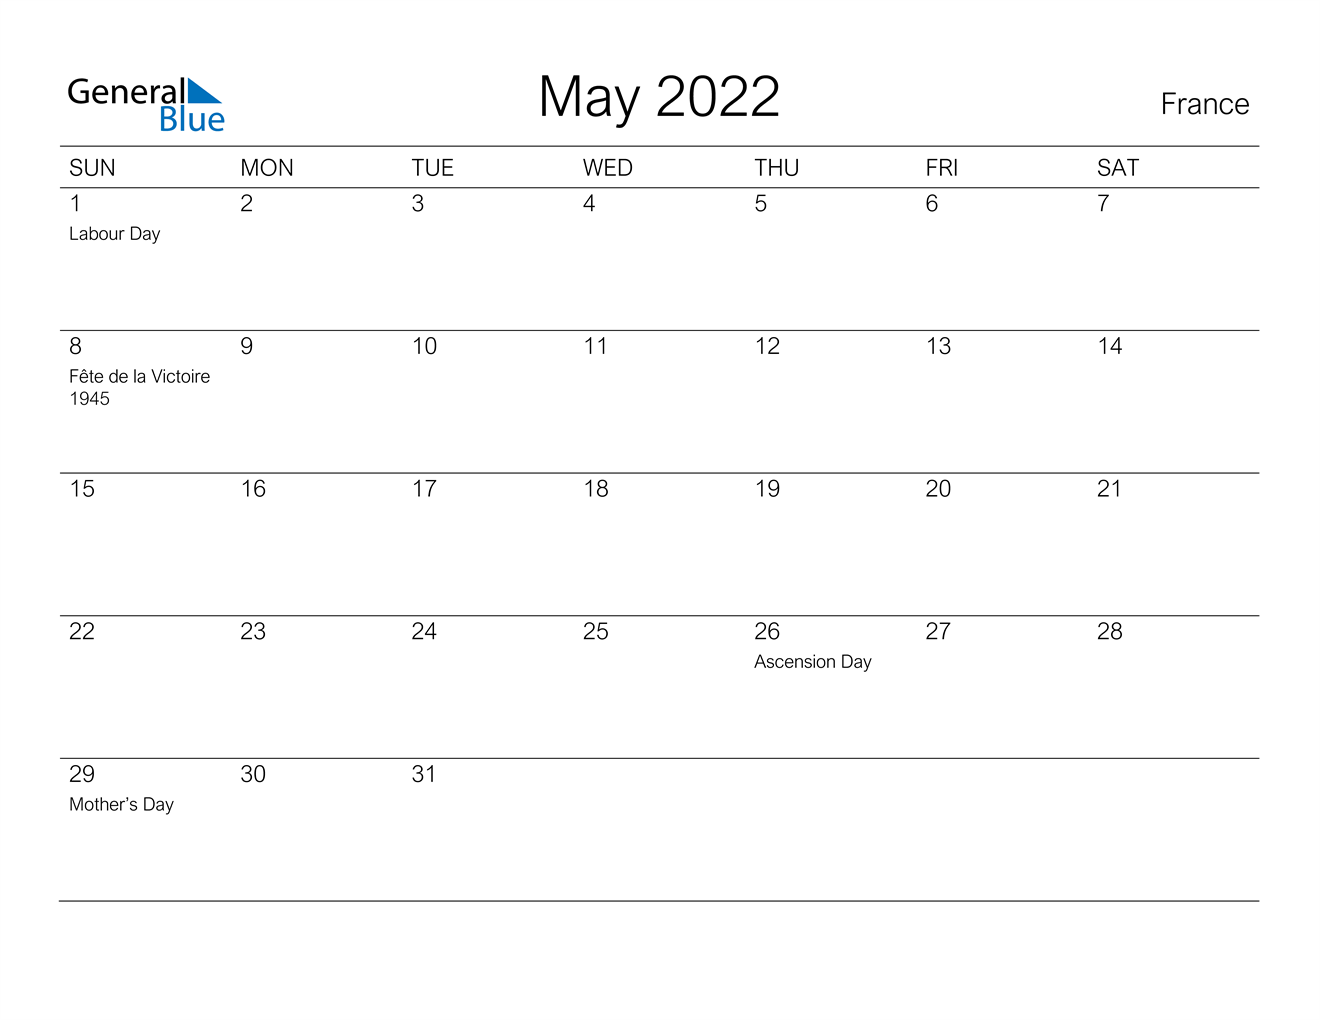 May 2022 Calendar - France